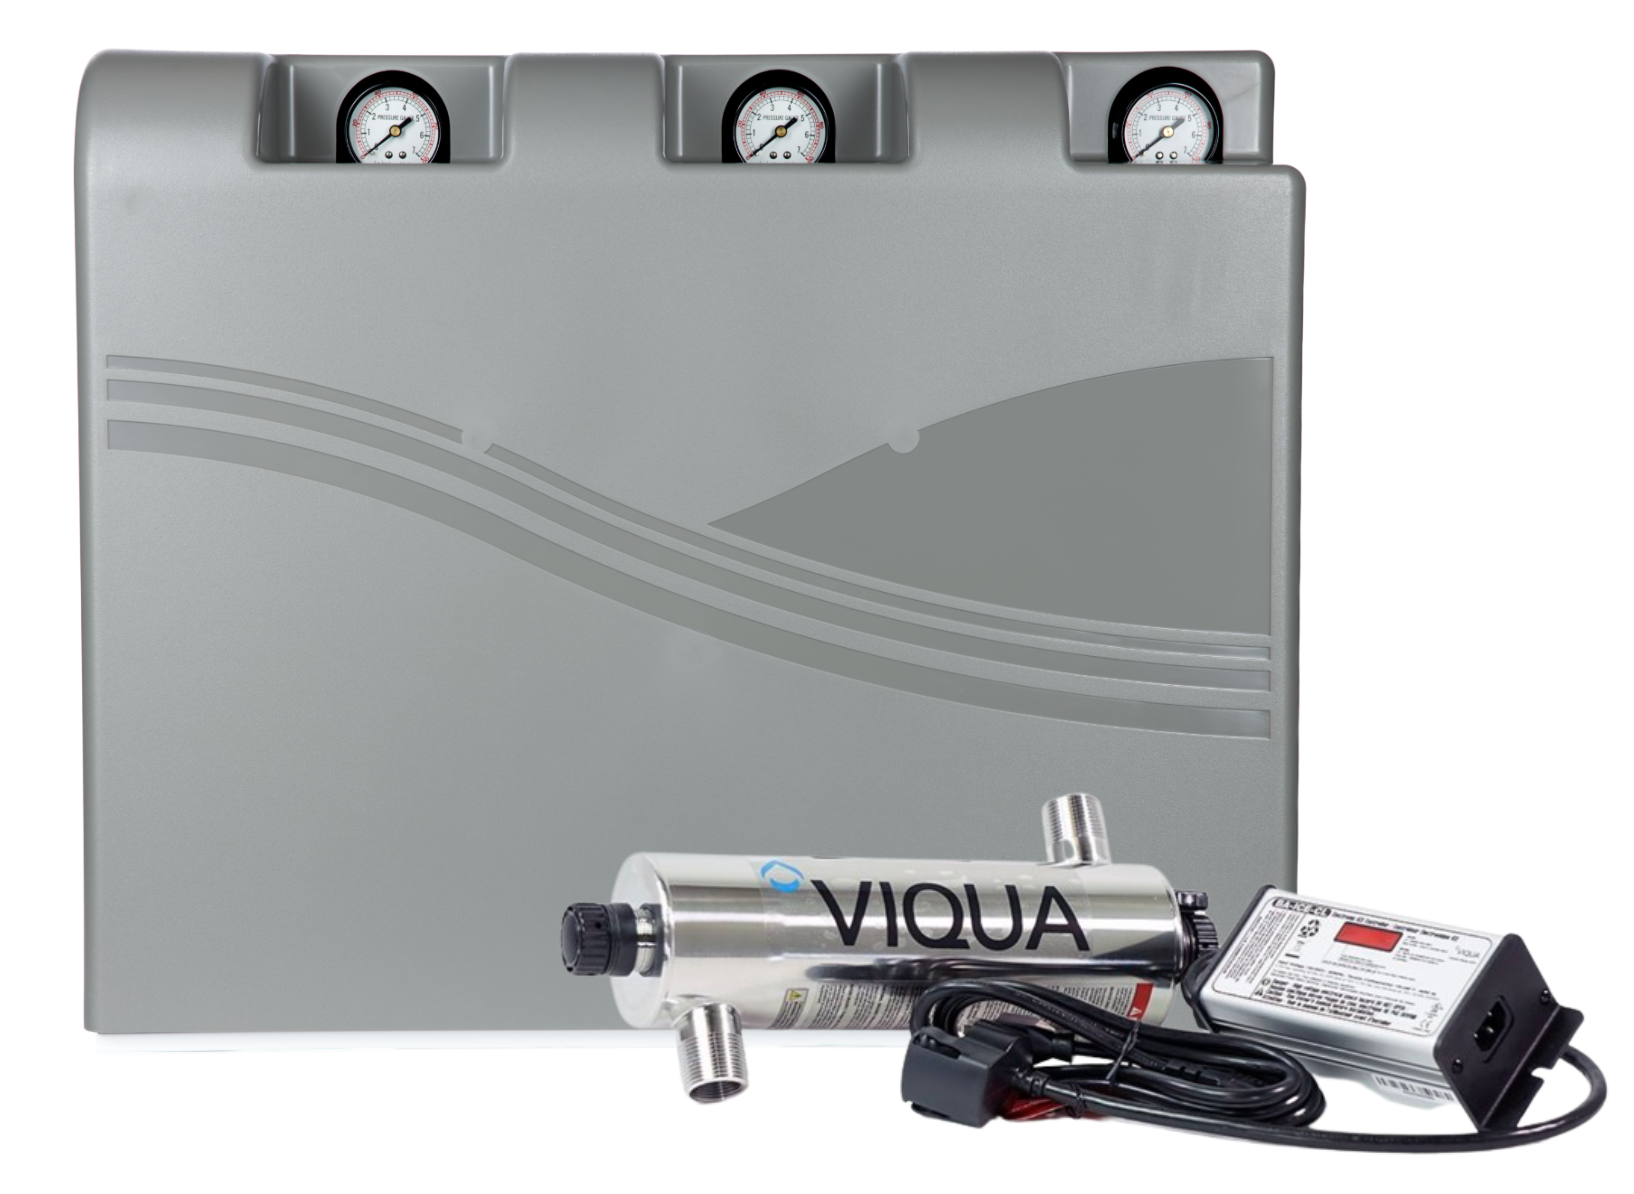 Viqua VH200 UV System